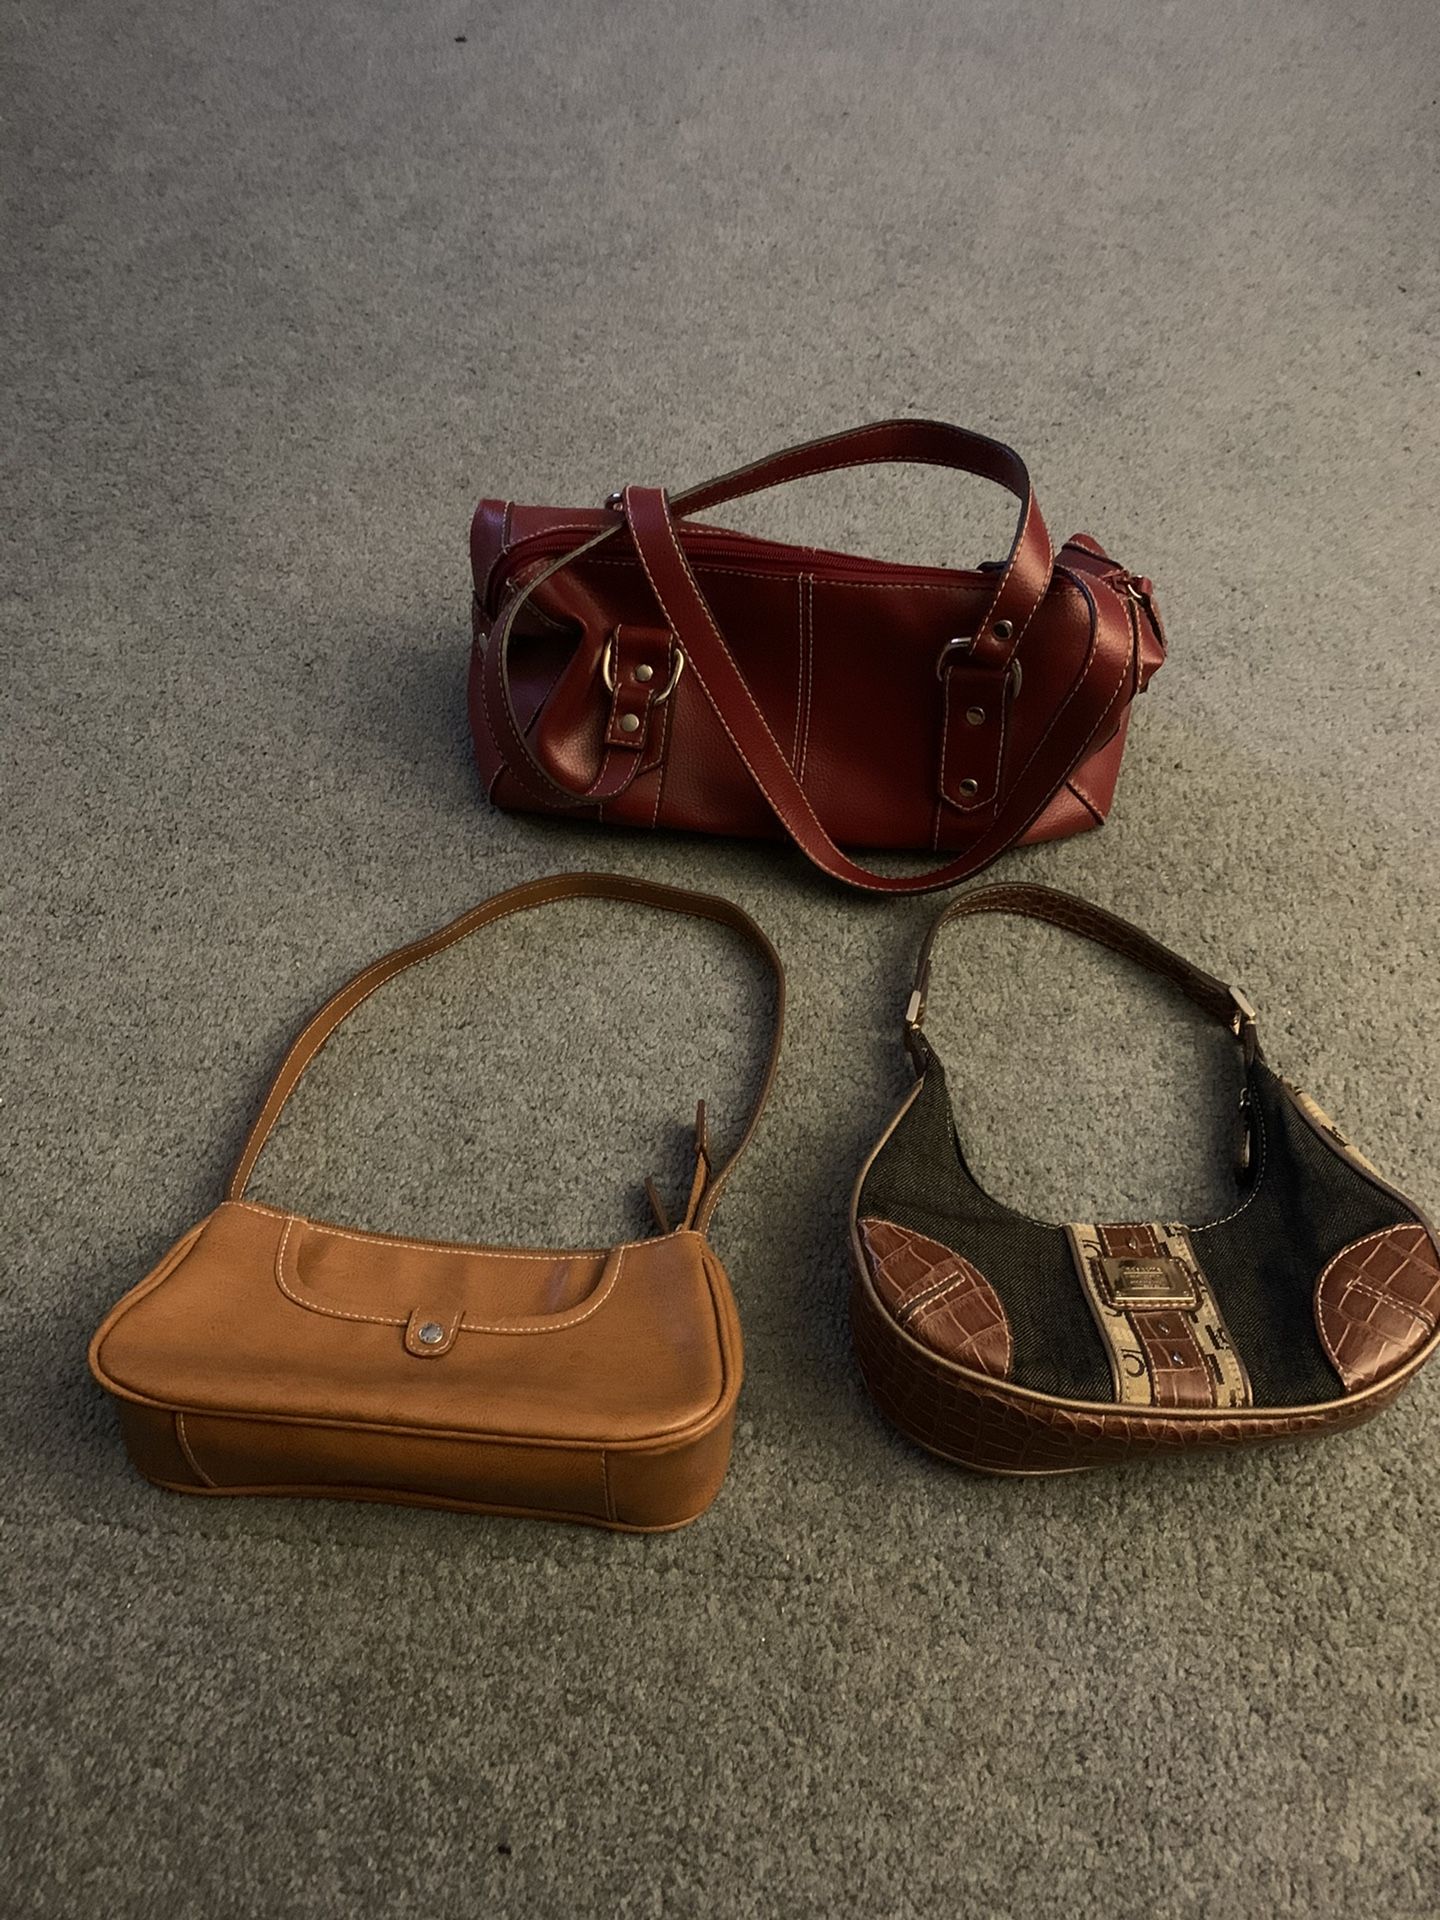 Tommy Hilfiger & Two Liz Claiborne Handbags